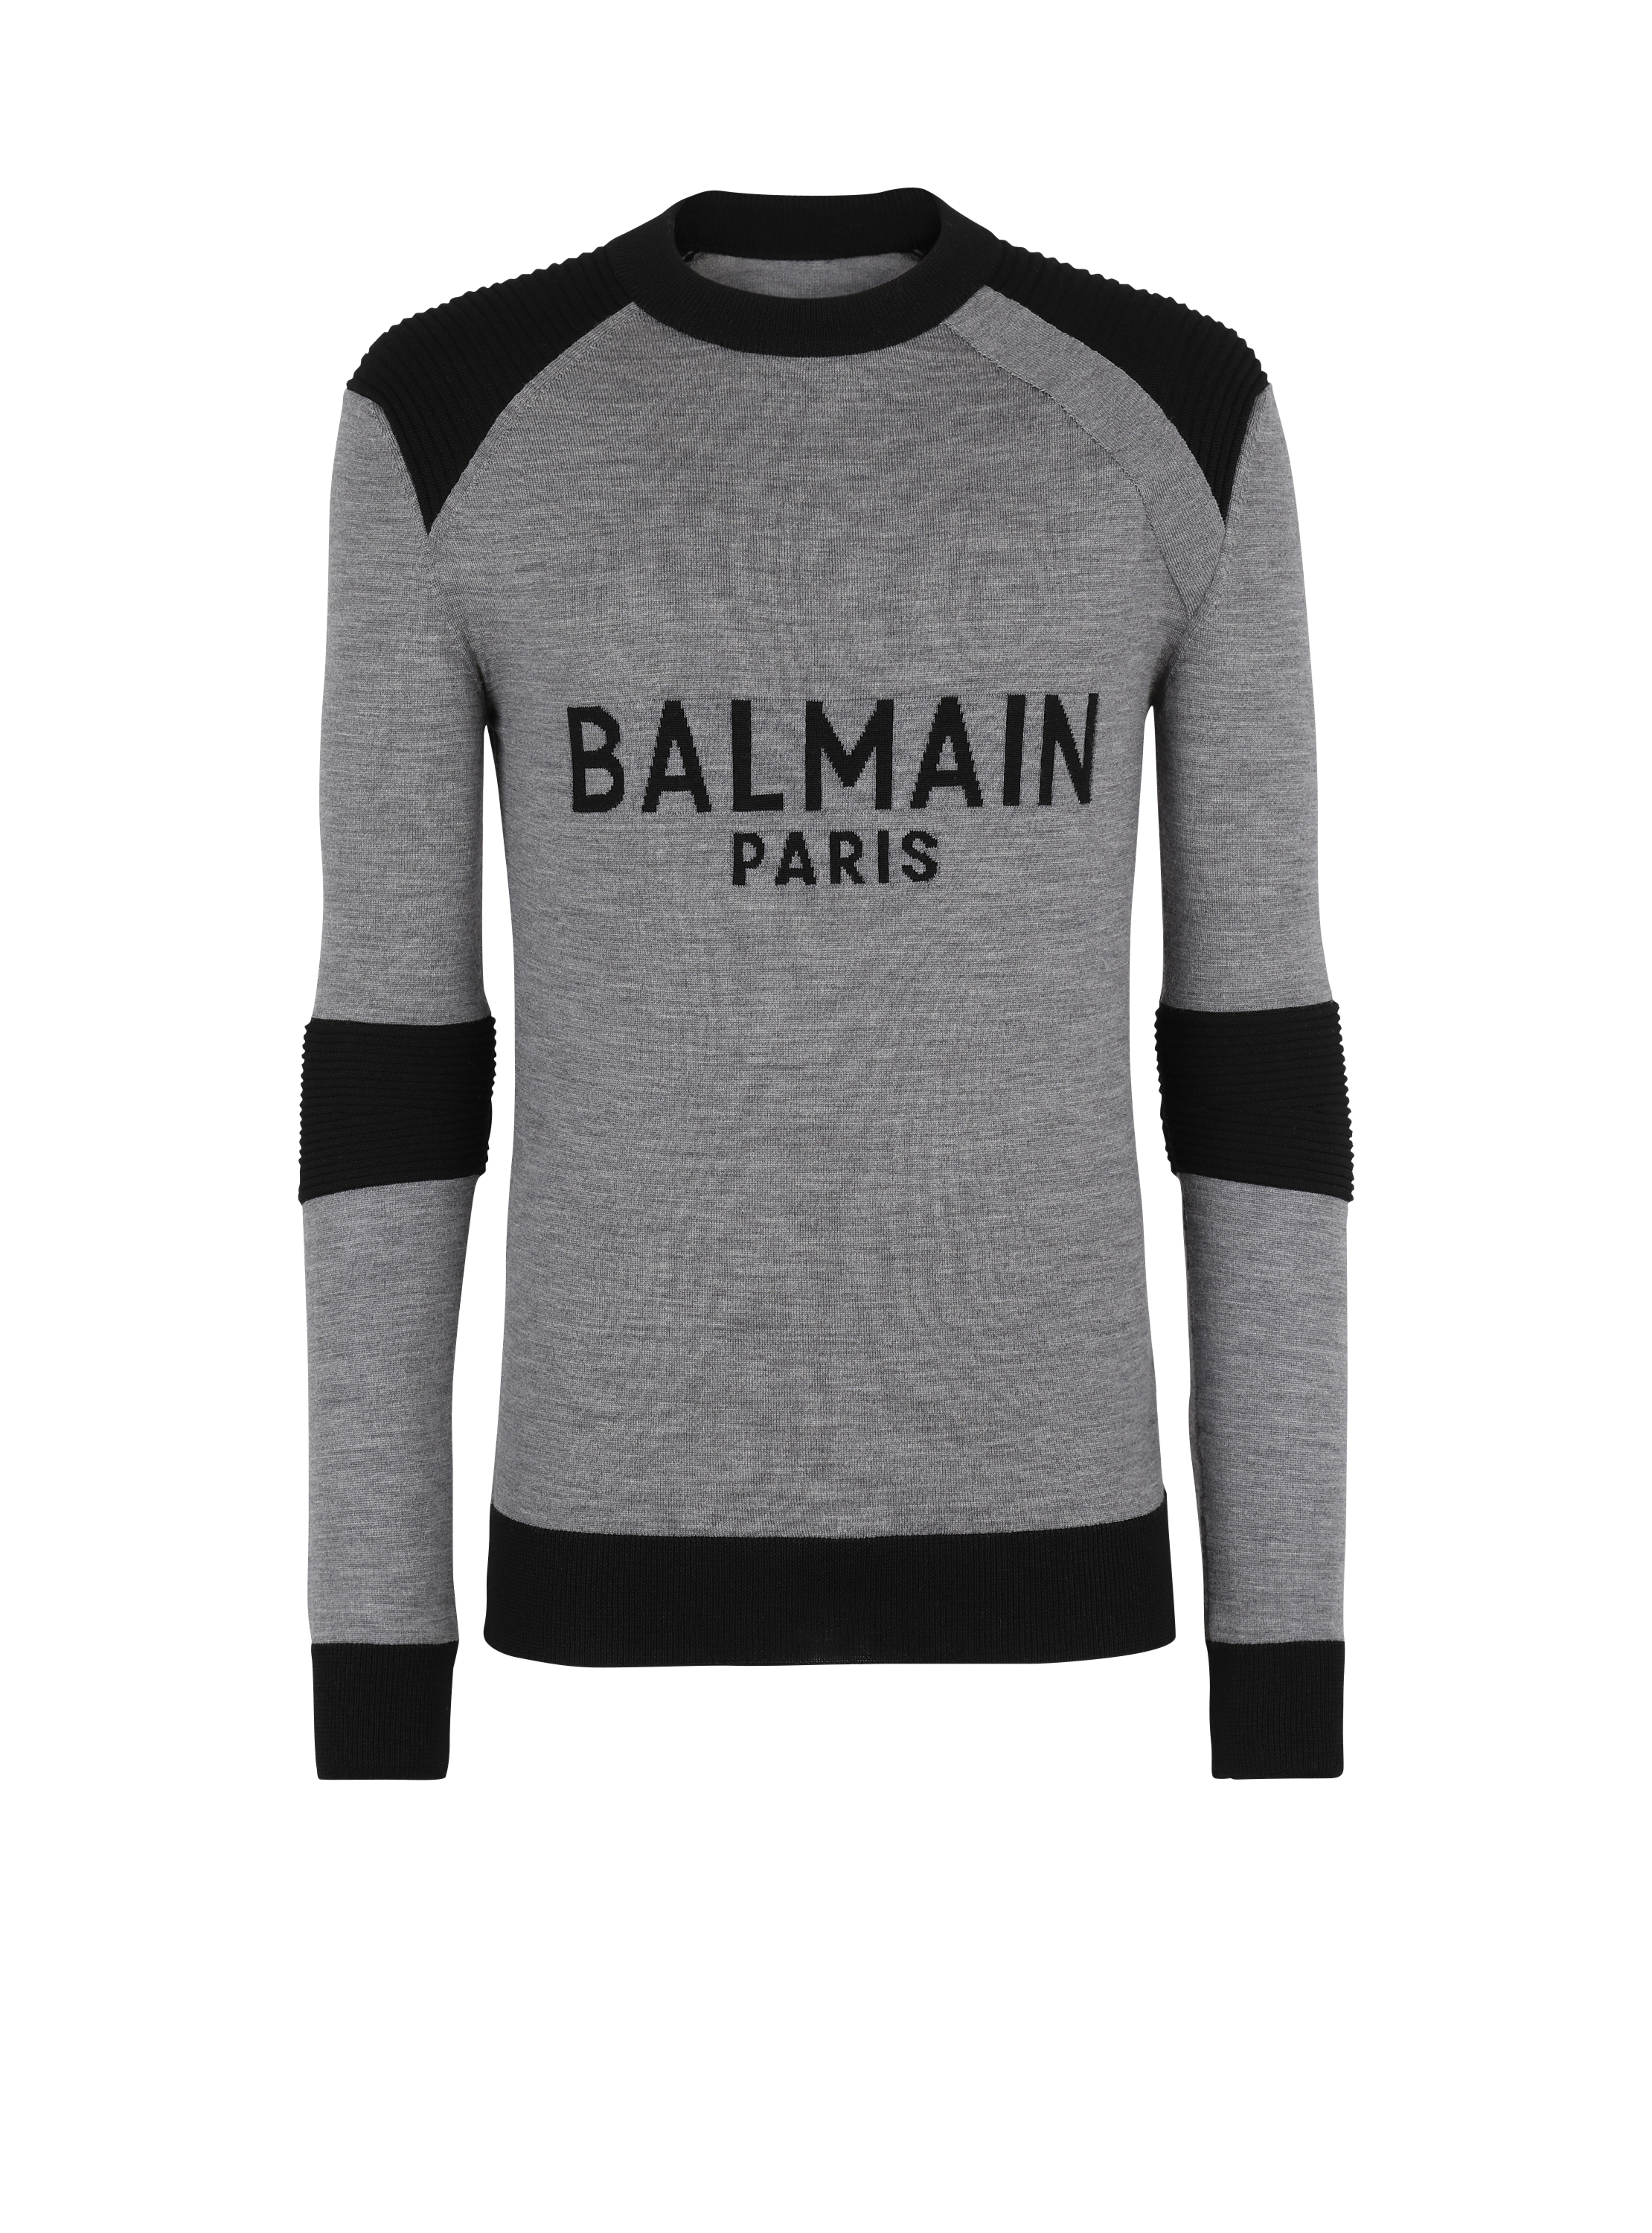 Wool jumper with Balmain Paris logo